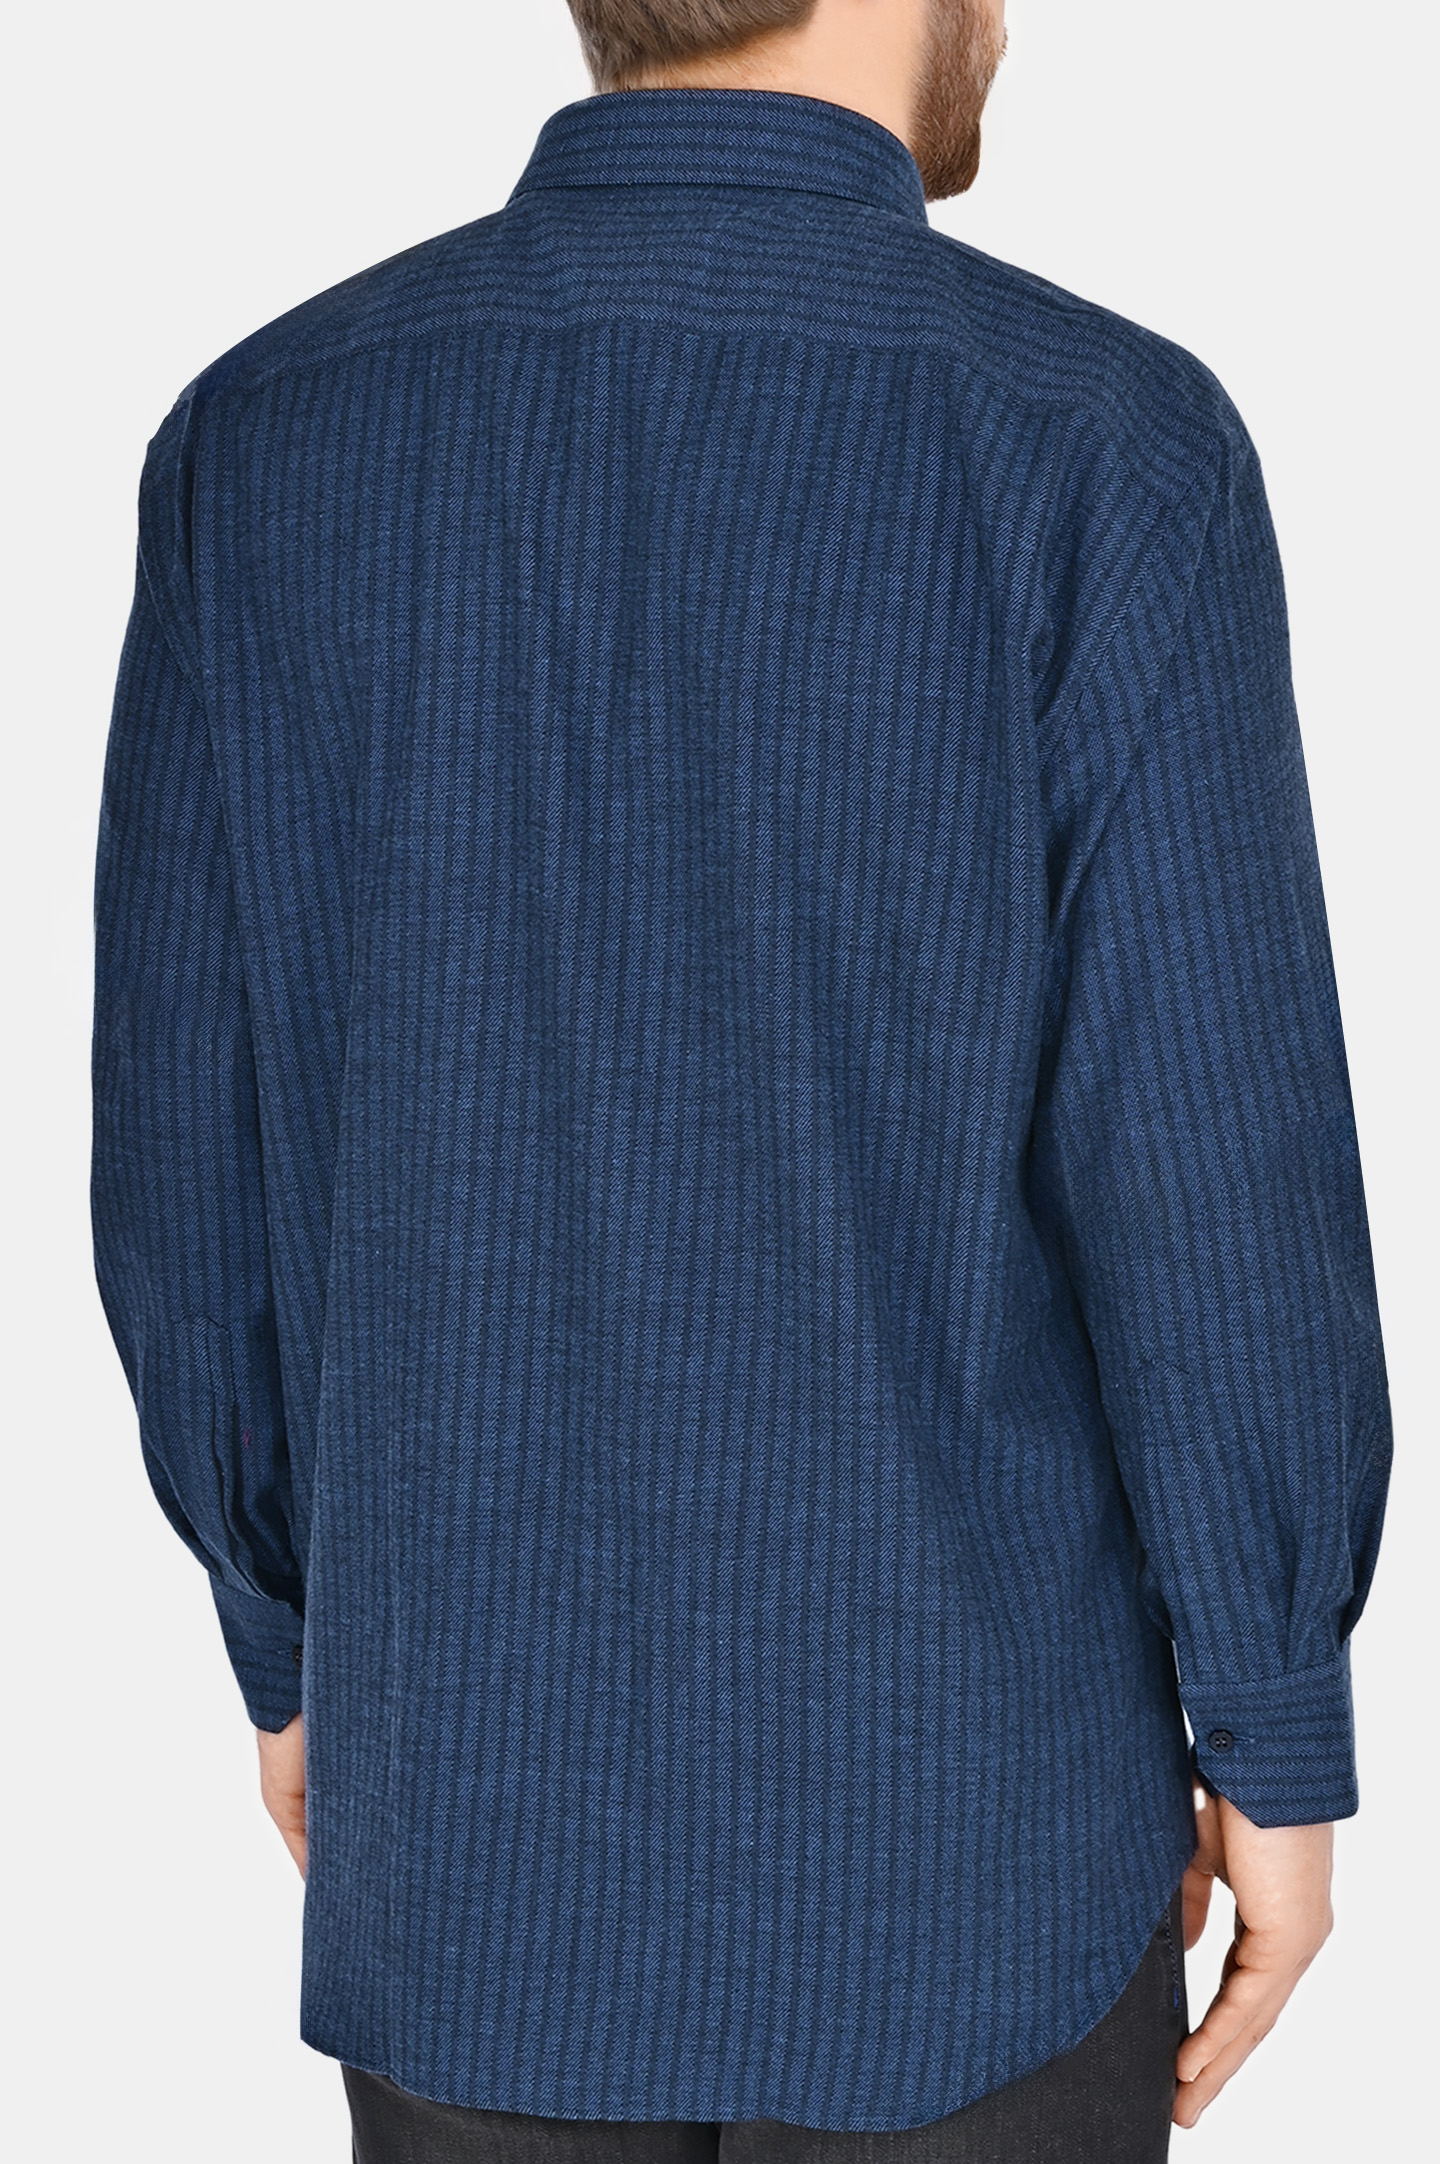 Рубашка STEFANO RICCI MC003905 R2667, цвет: Темно-синий, Мужской